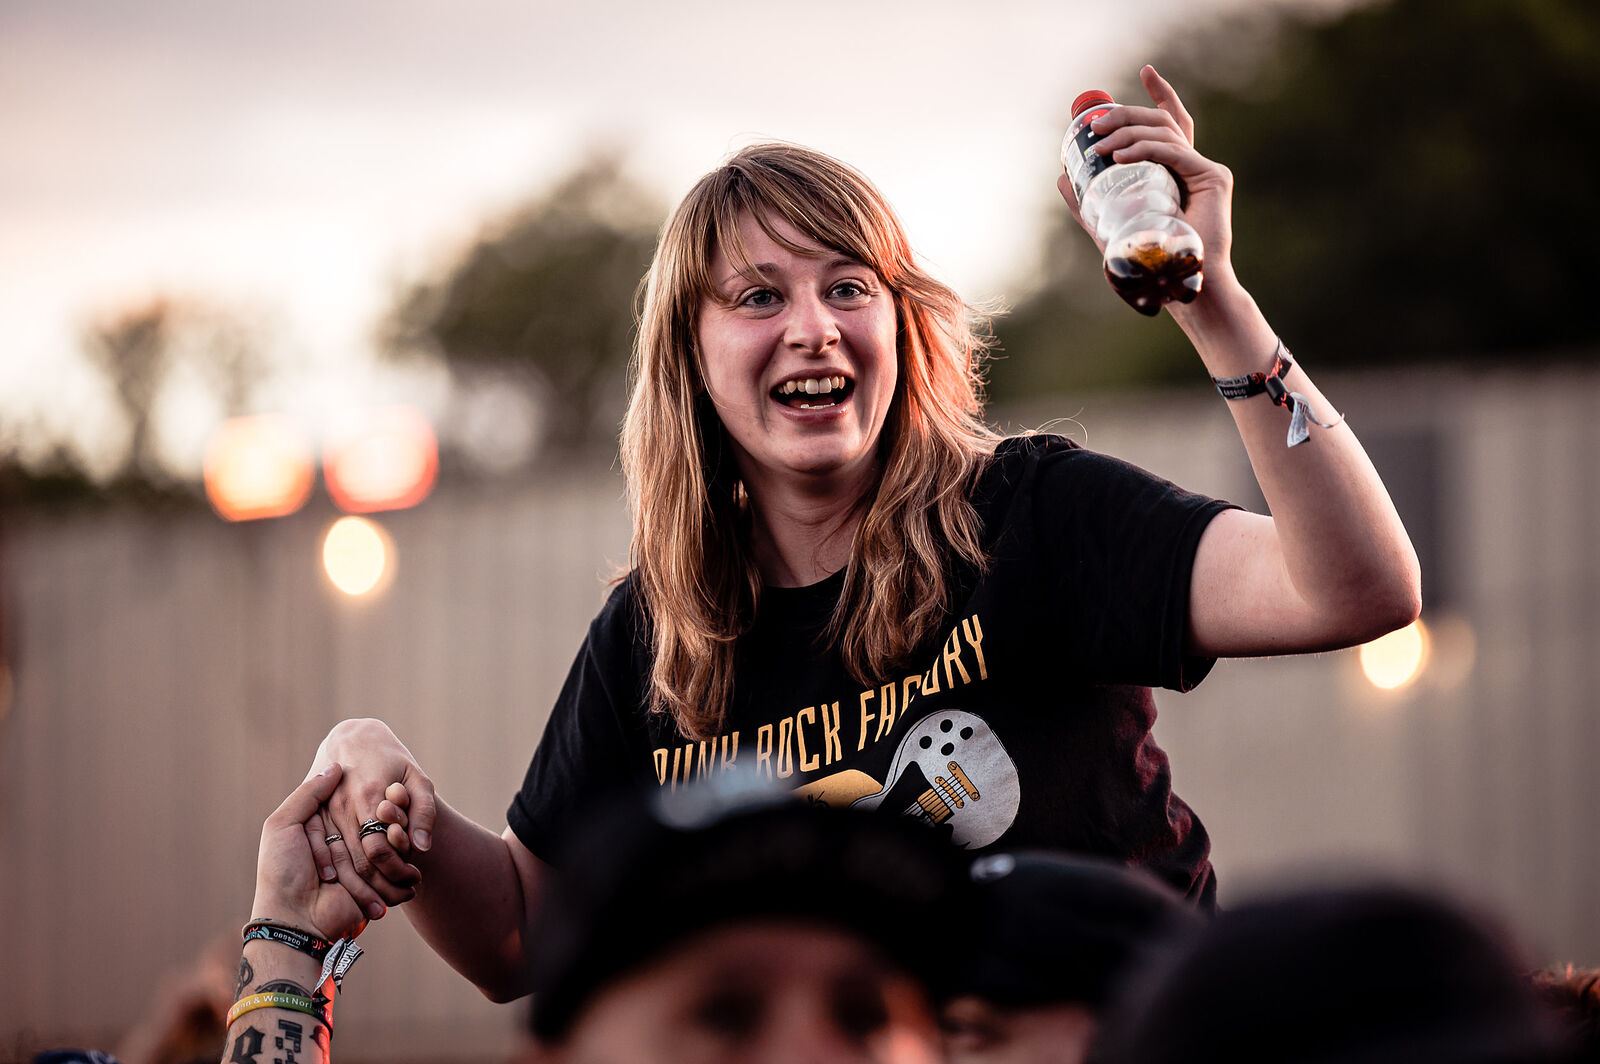 Download Festival 2022